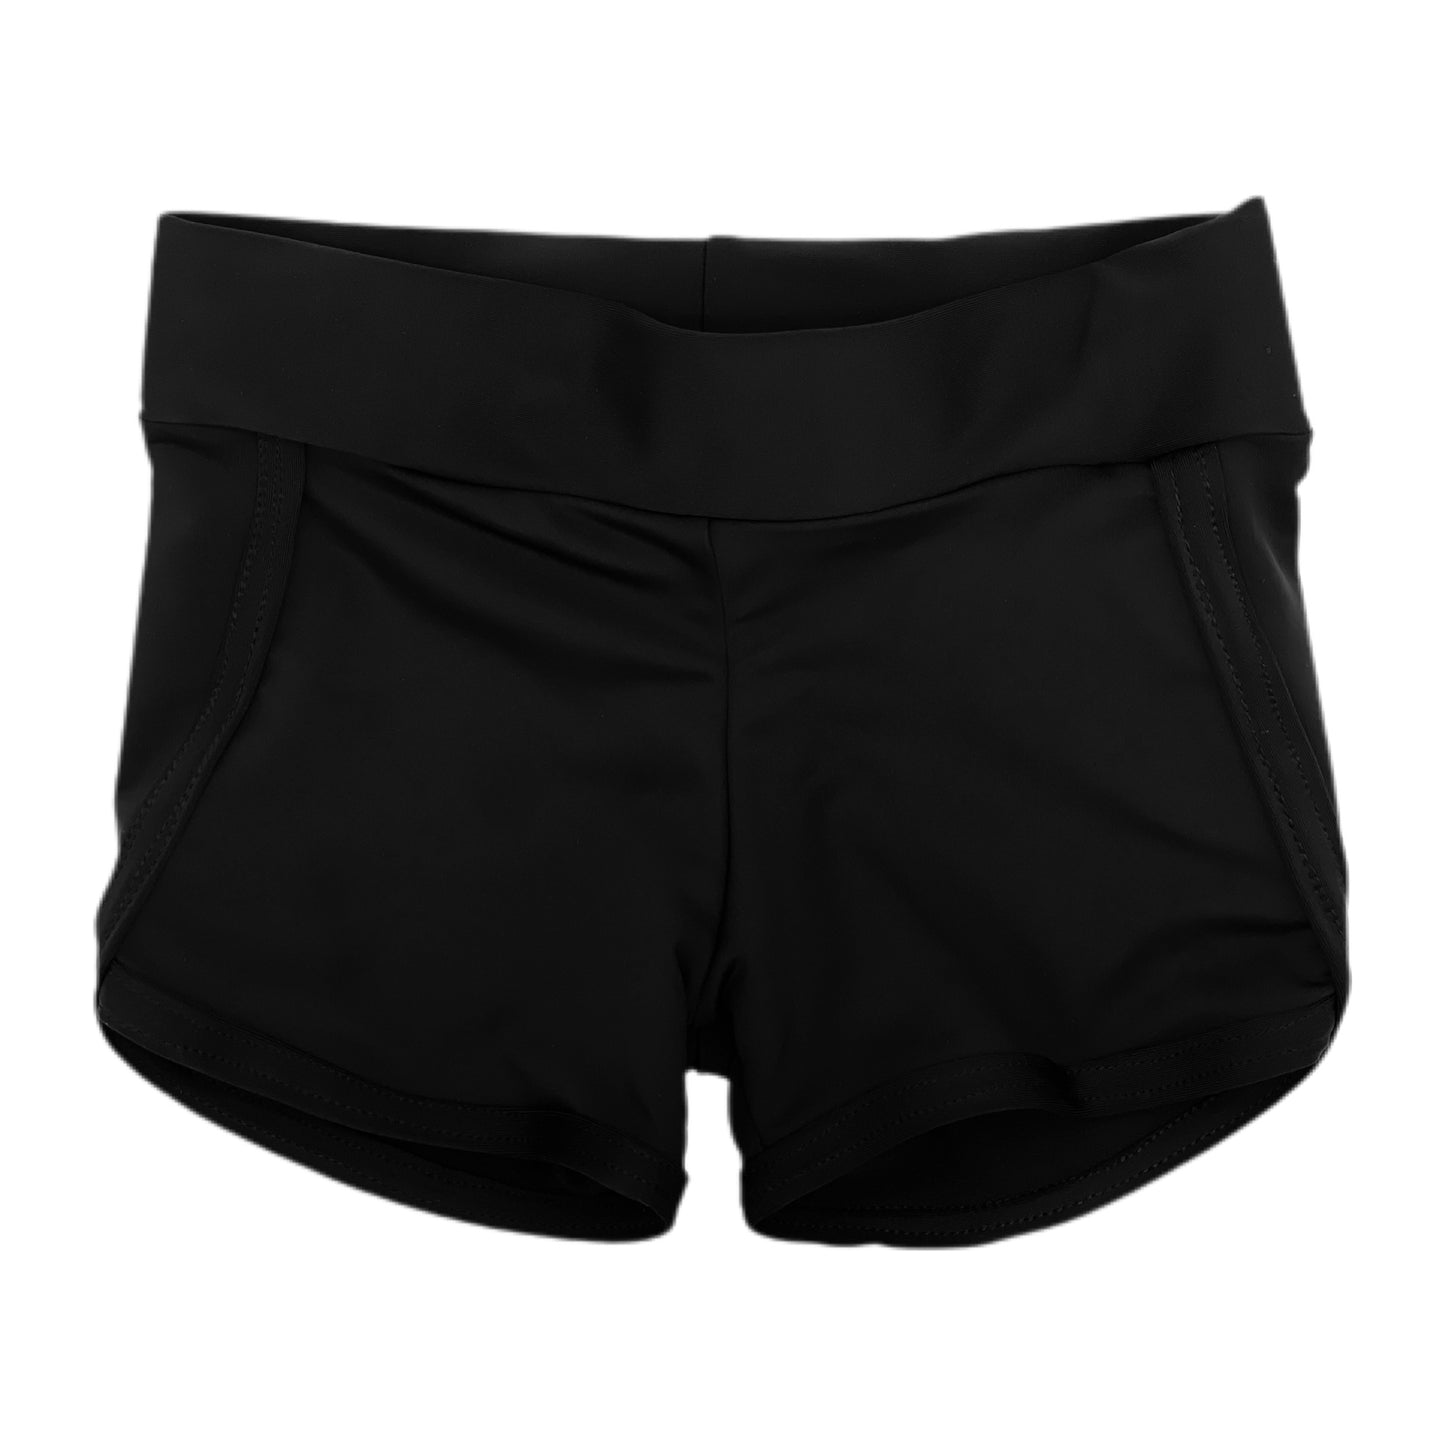 Balboa Sporty Shorts